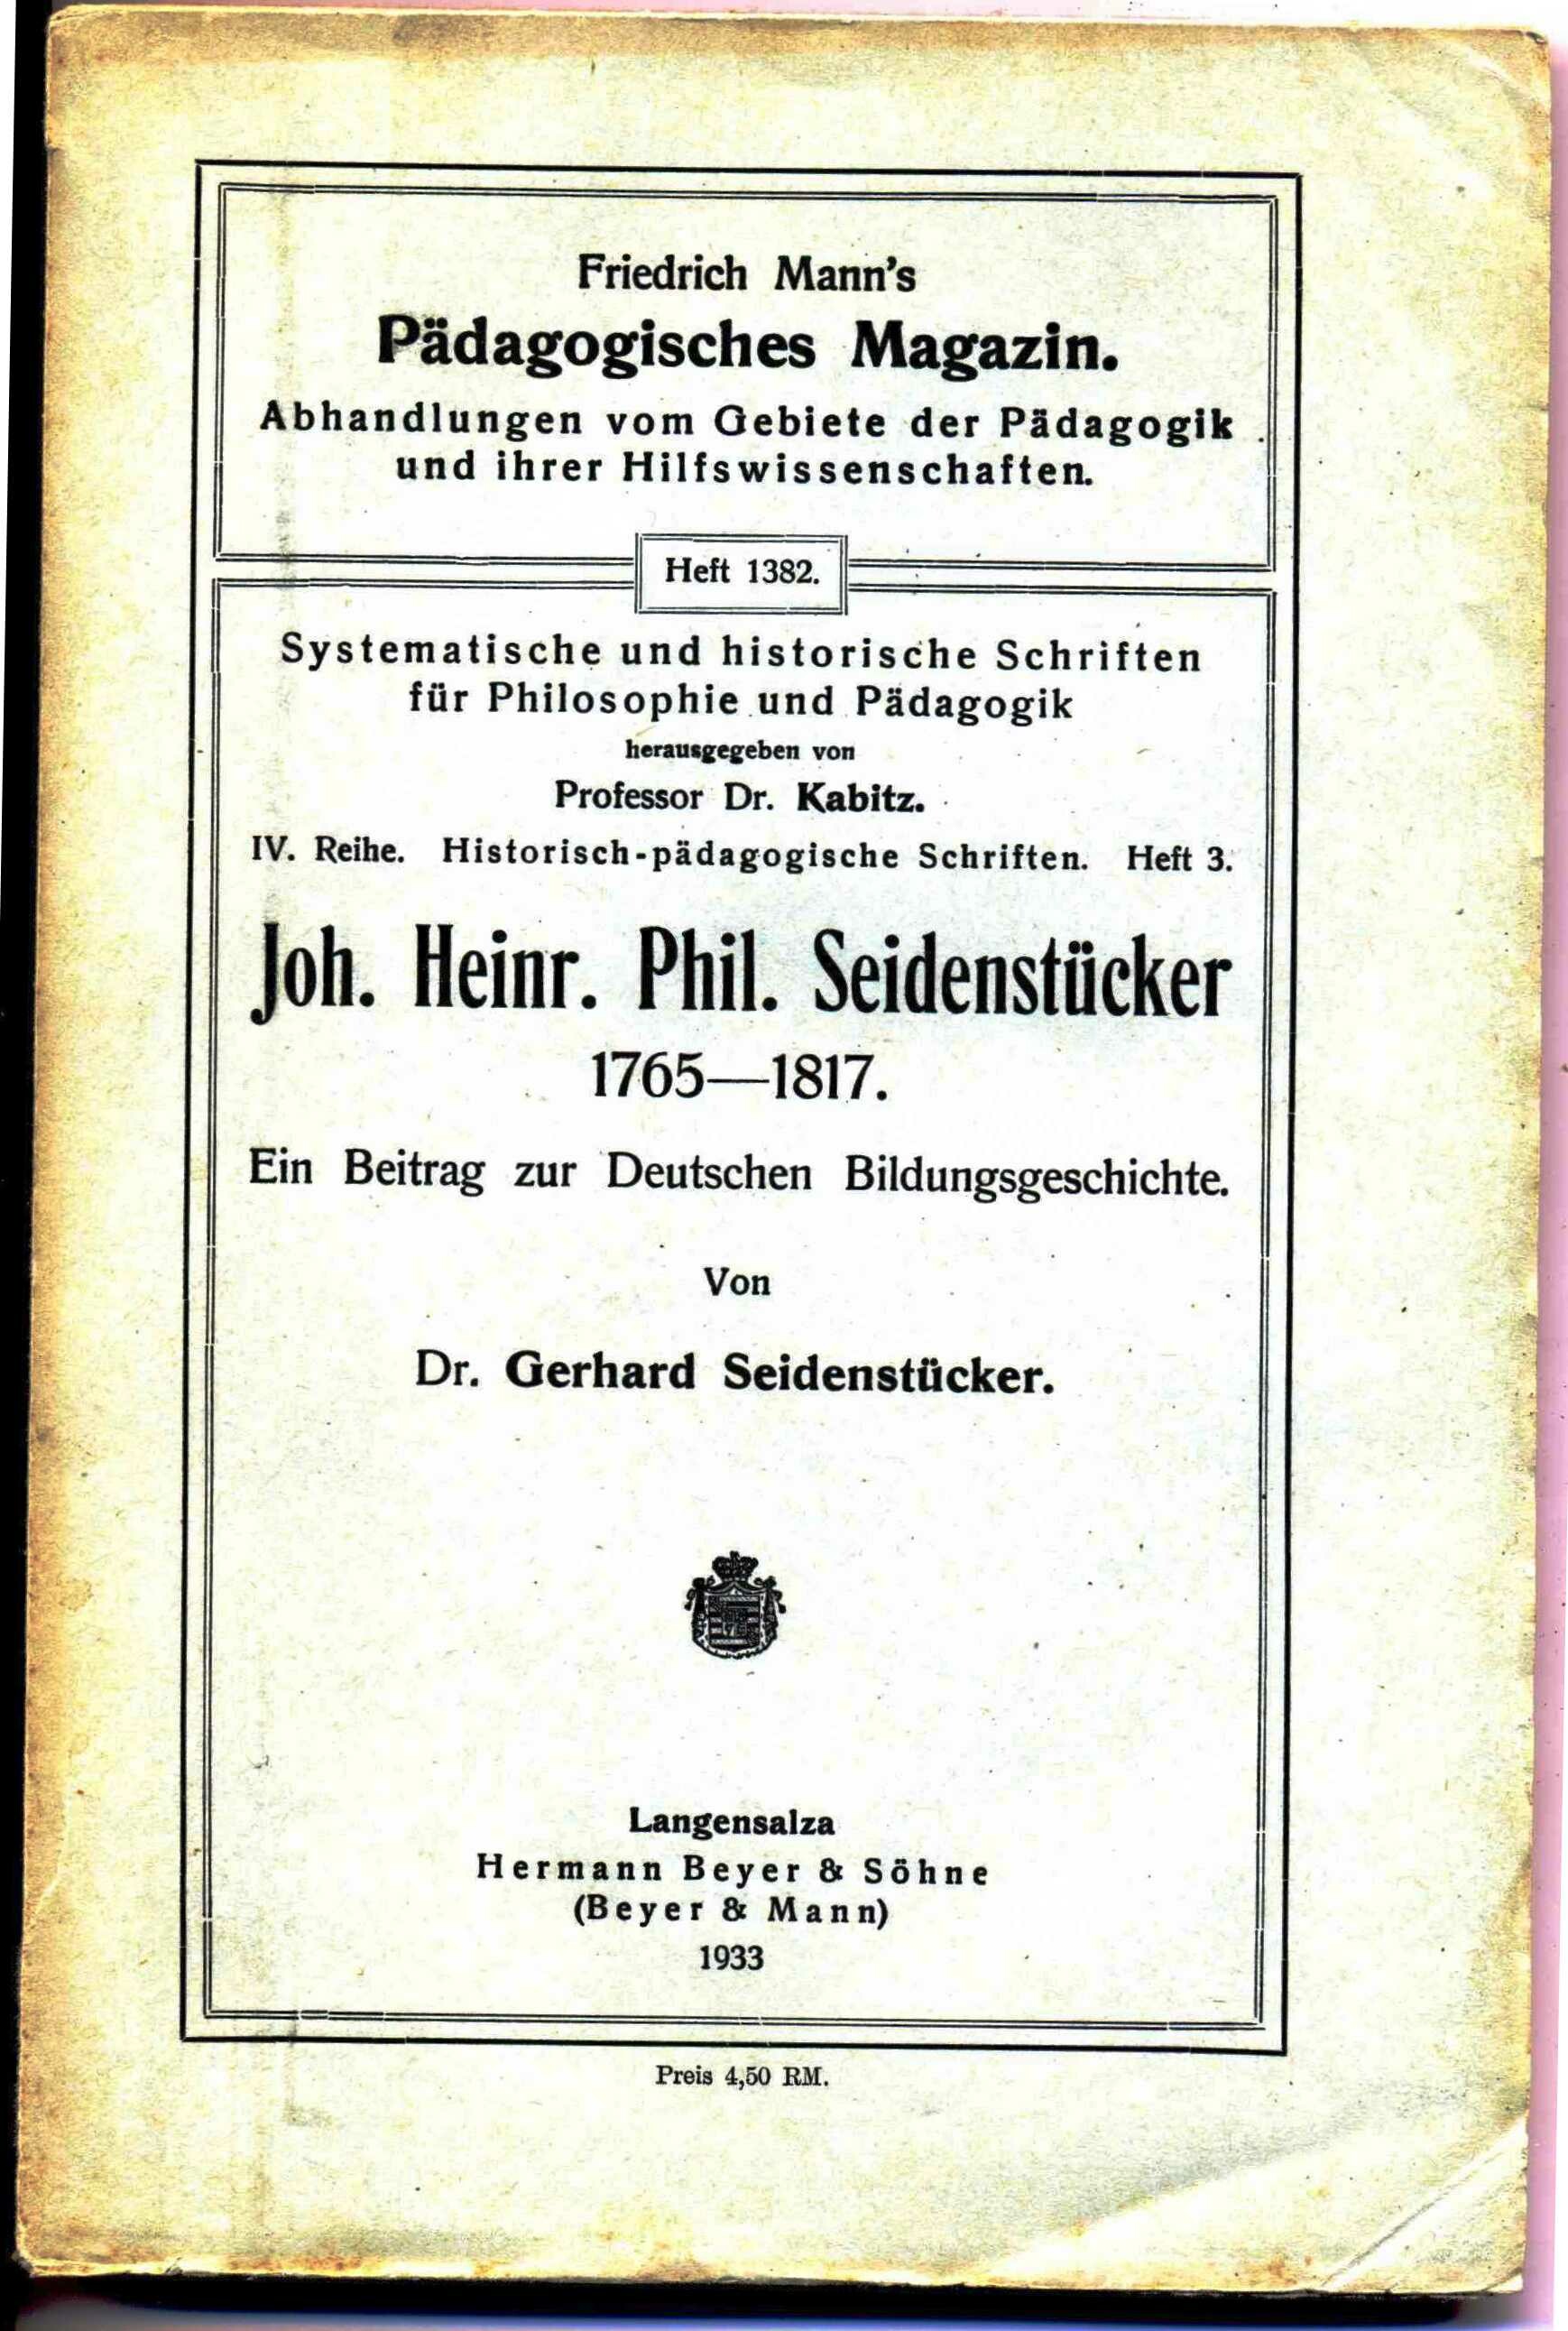 Biografie Johann Heinrich Philipp Seidenstücker (Stadtmuseum Lippstadt RR-F)